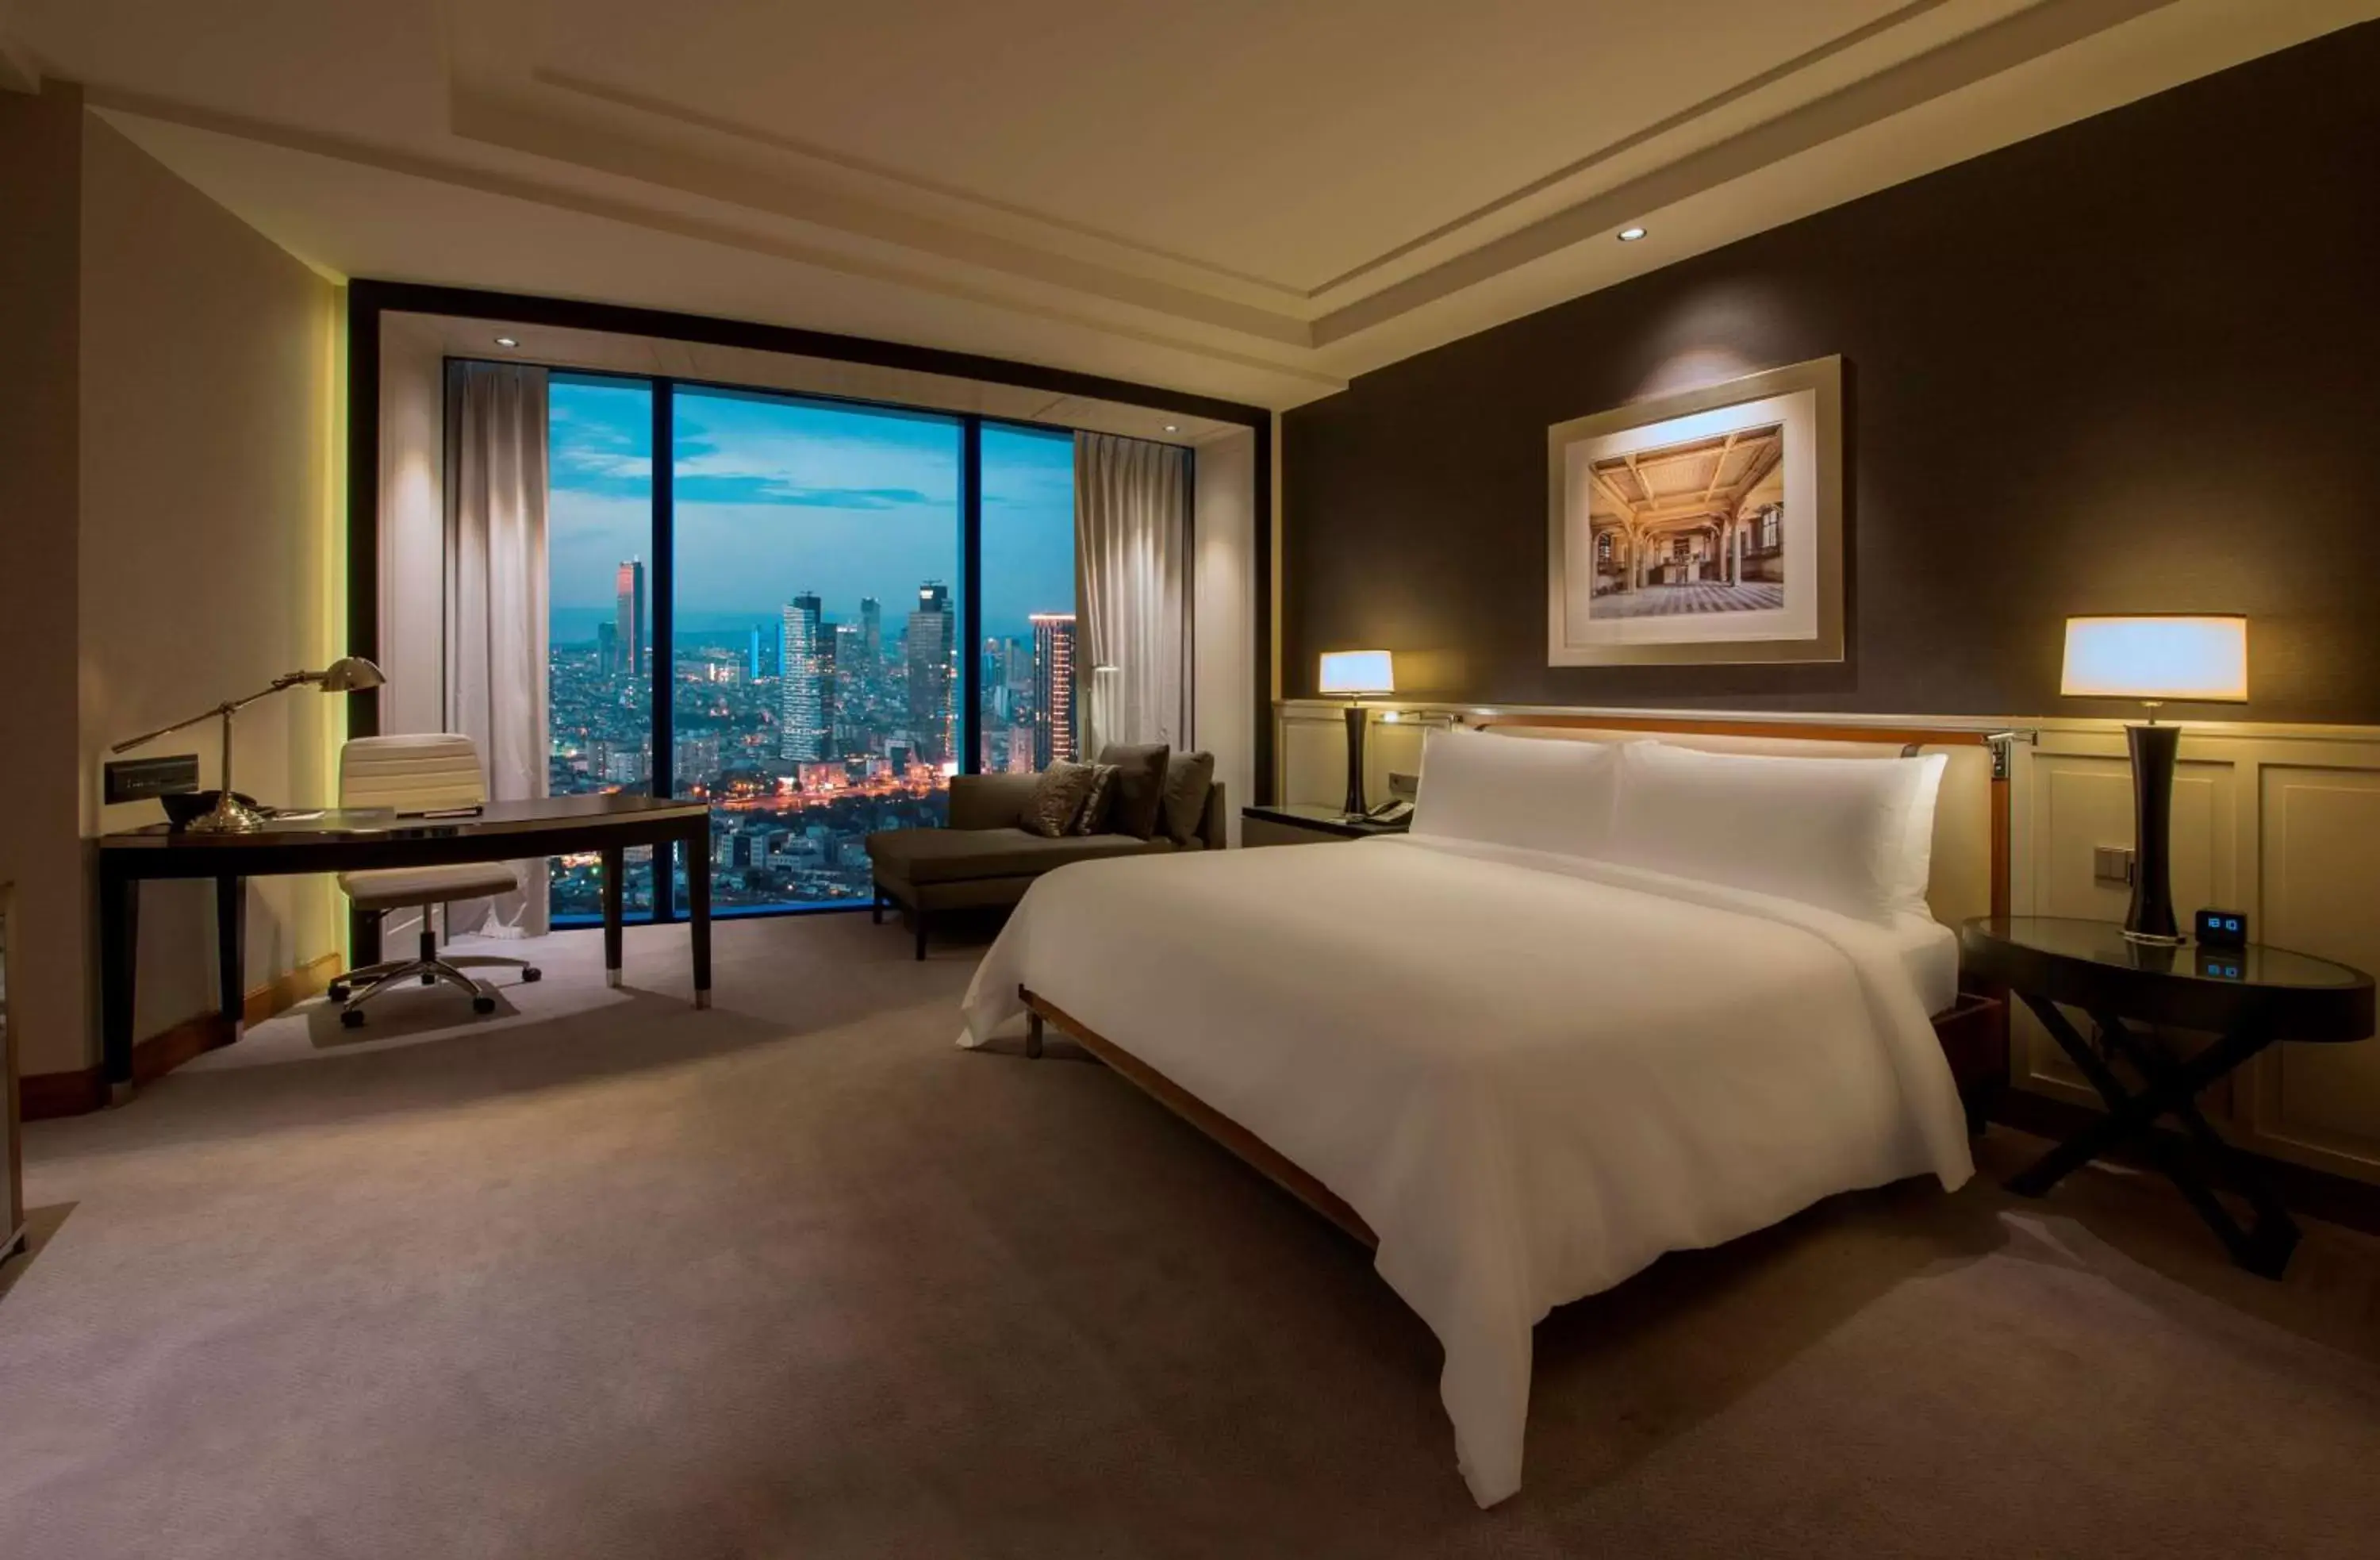 Bedroom in Hilton Istanbul Bomonti